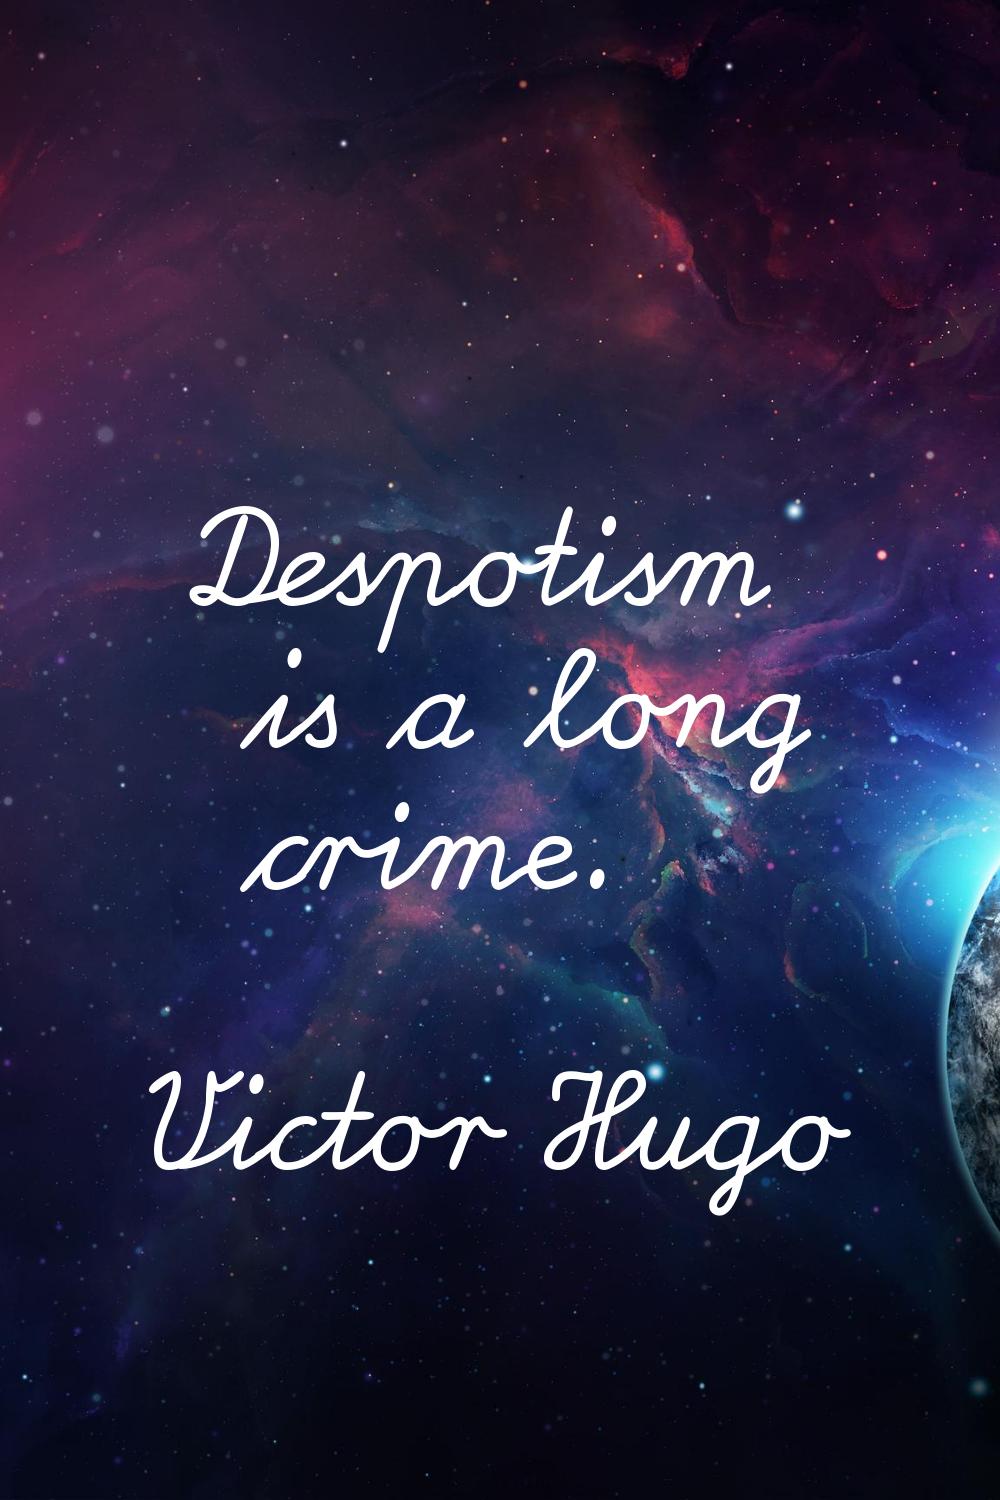 Despotism is a long crime.